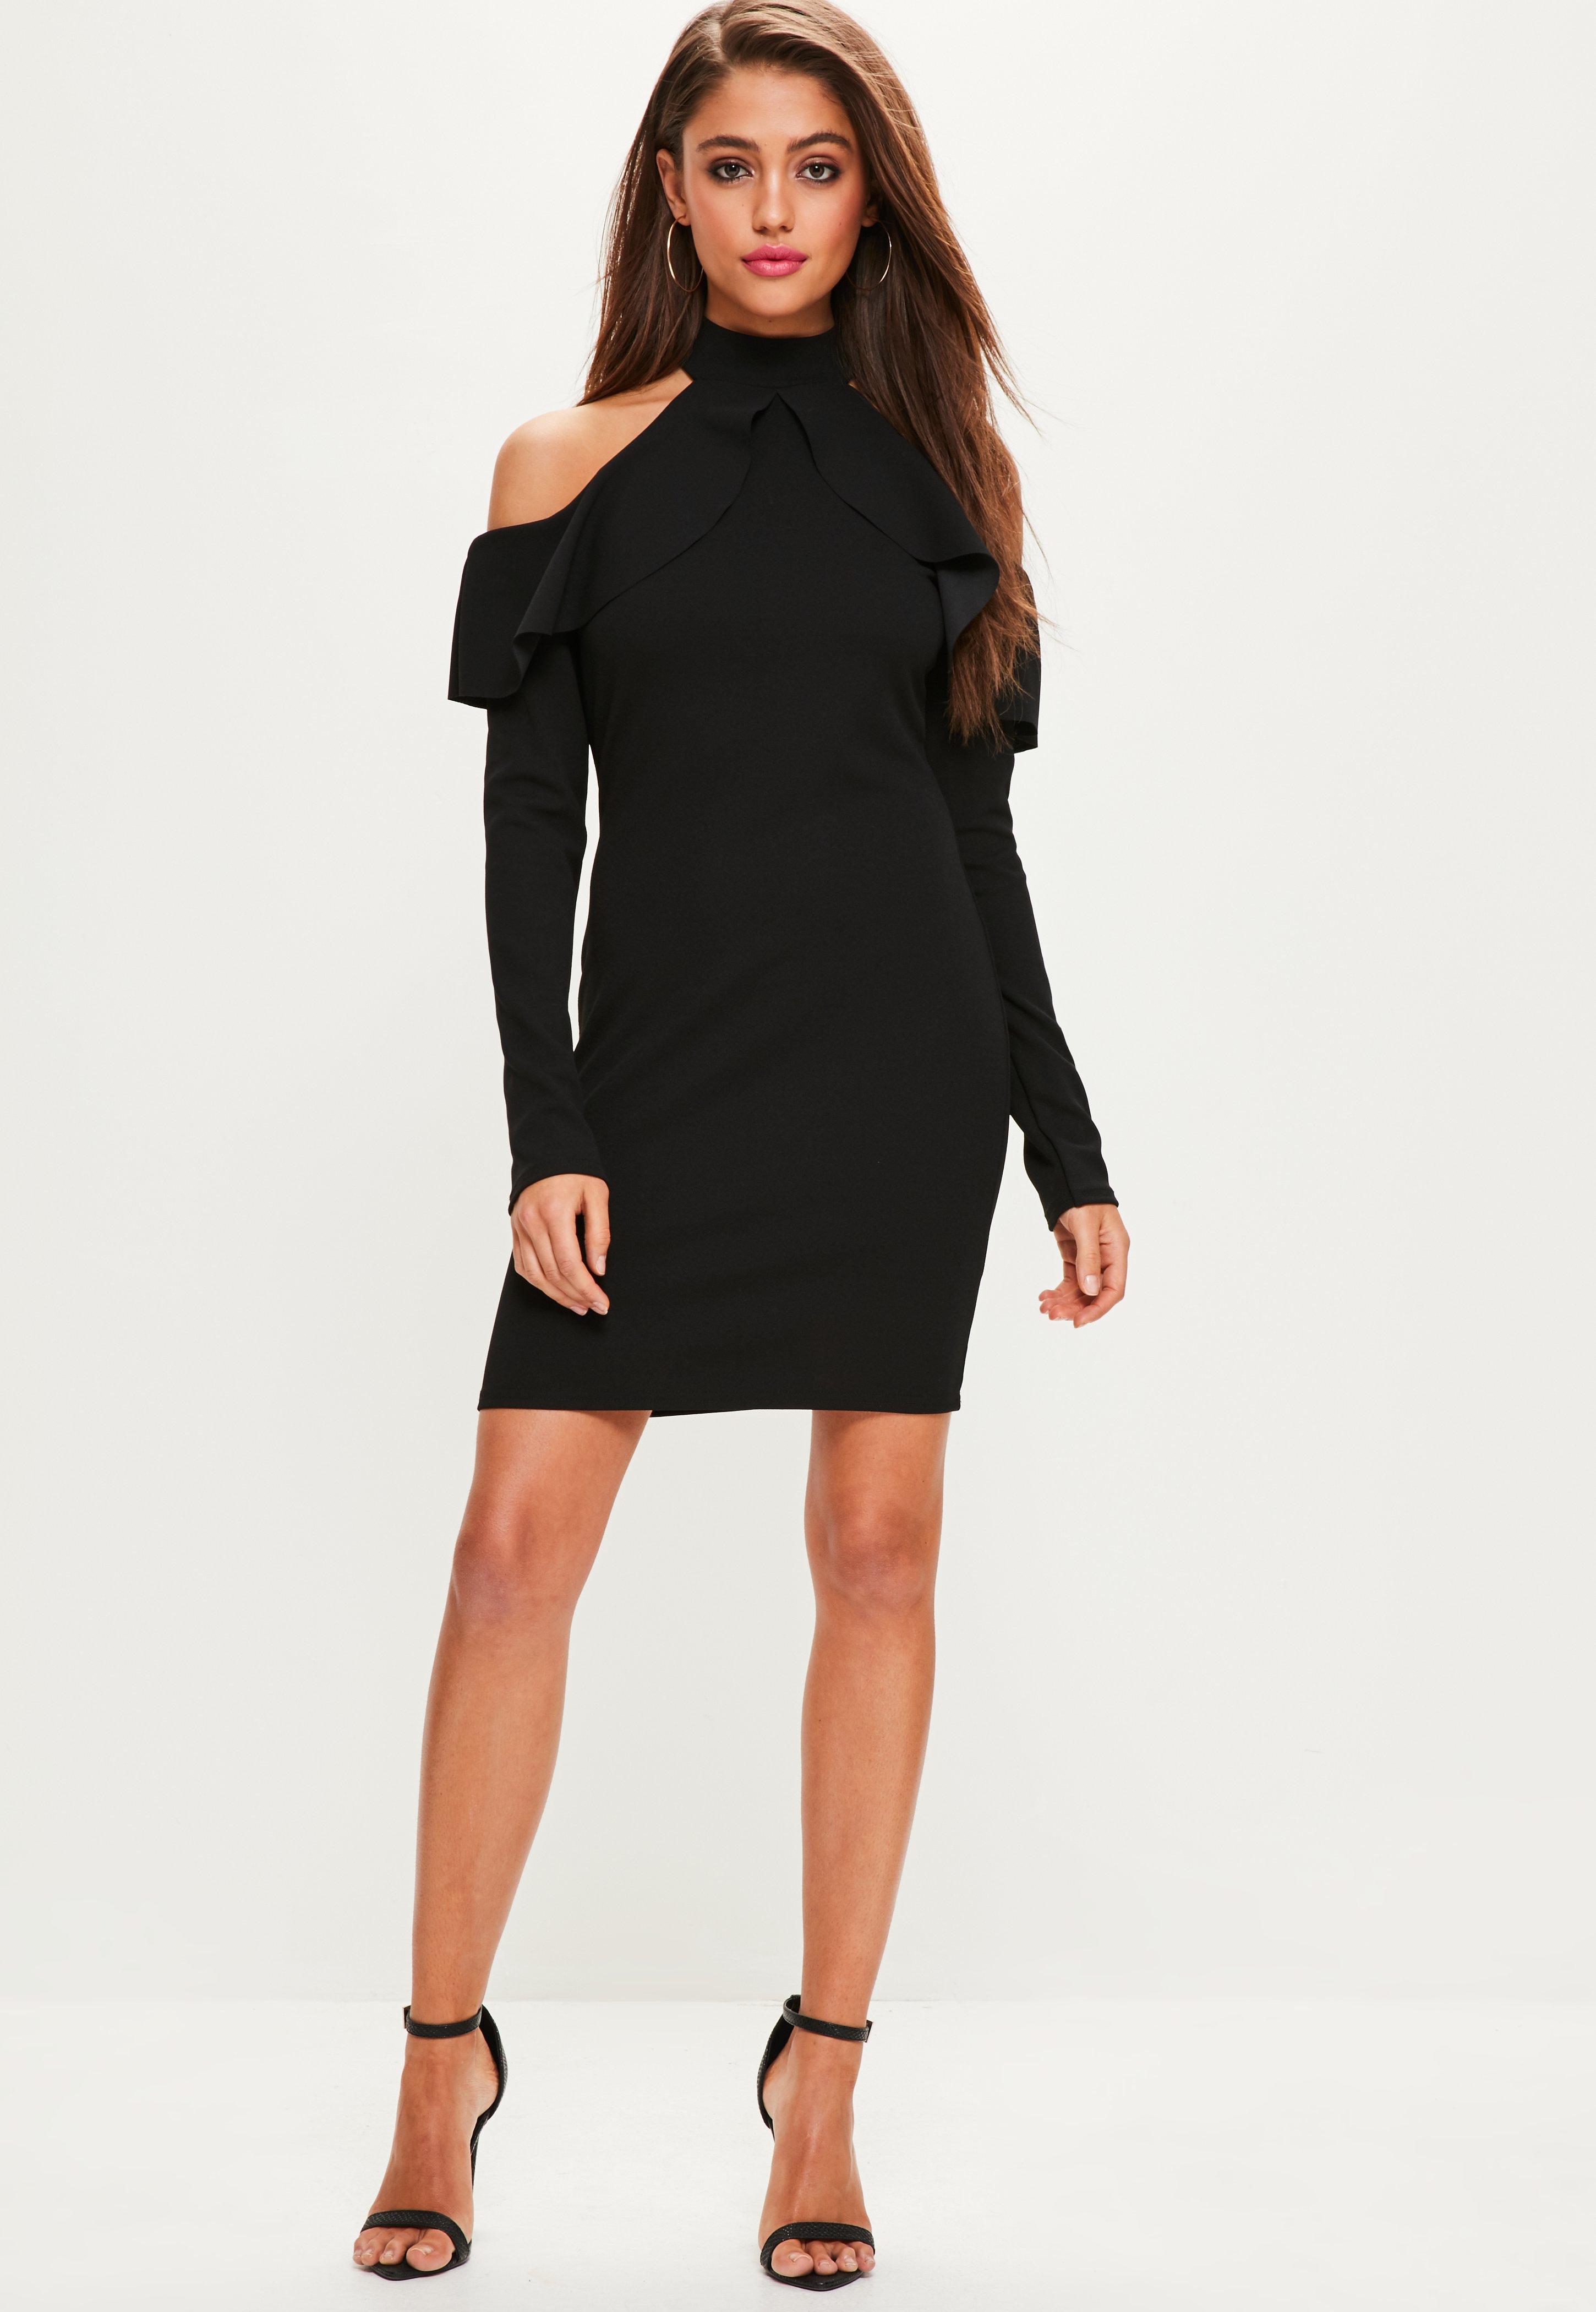 Lyst - Missguided Frill Cold Shoulder Long Sleeve Dress Black in Black